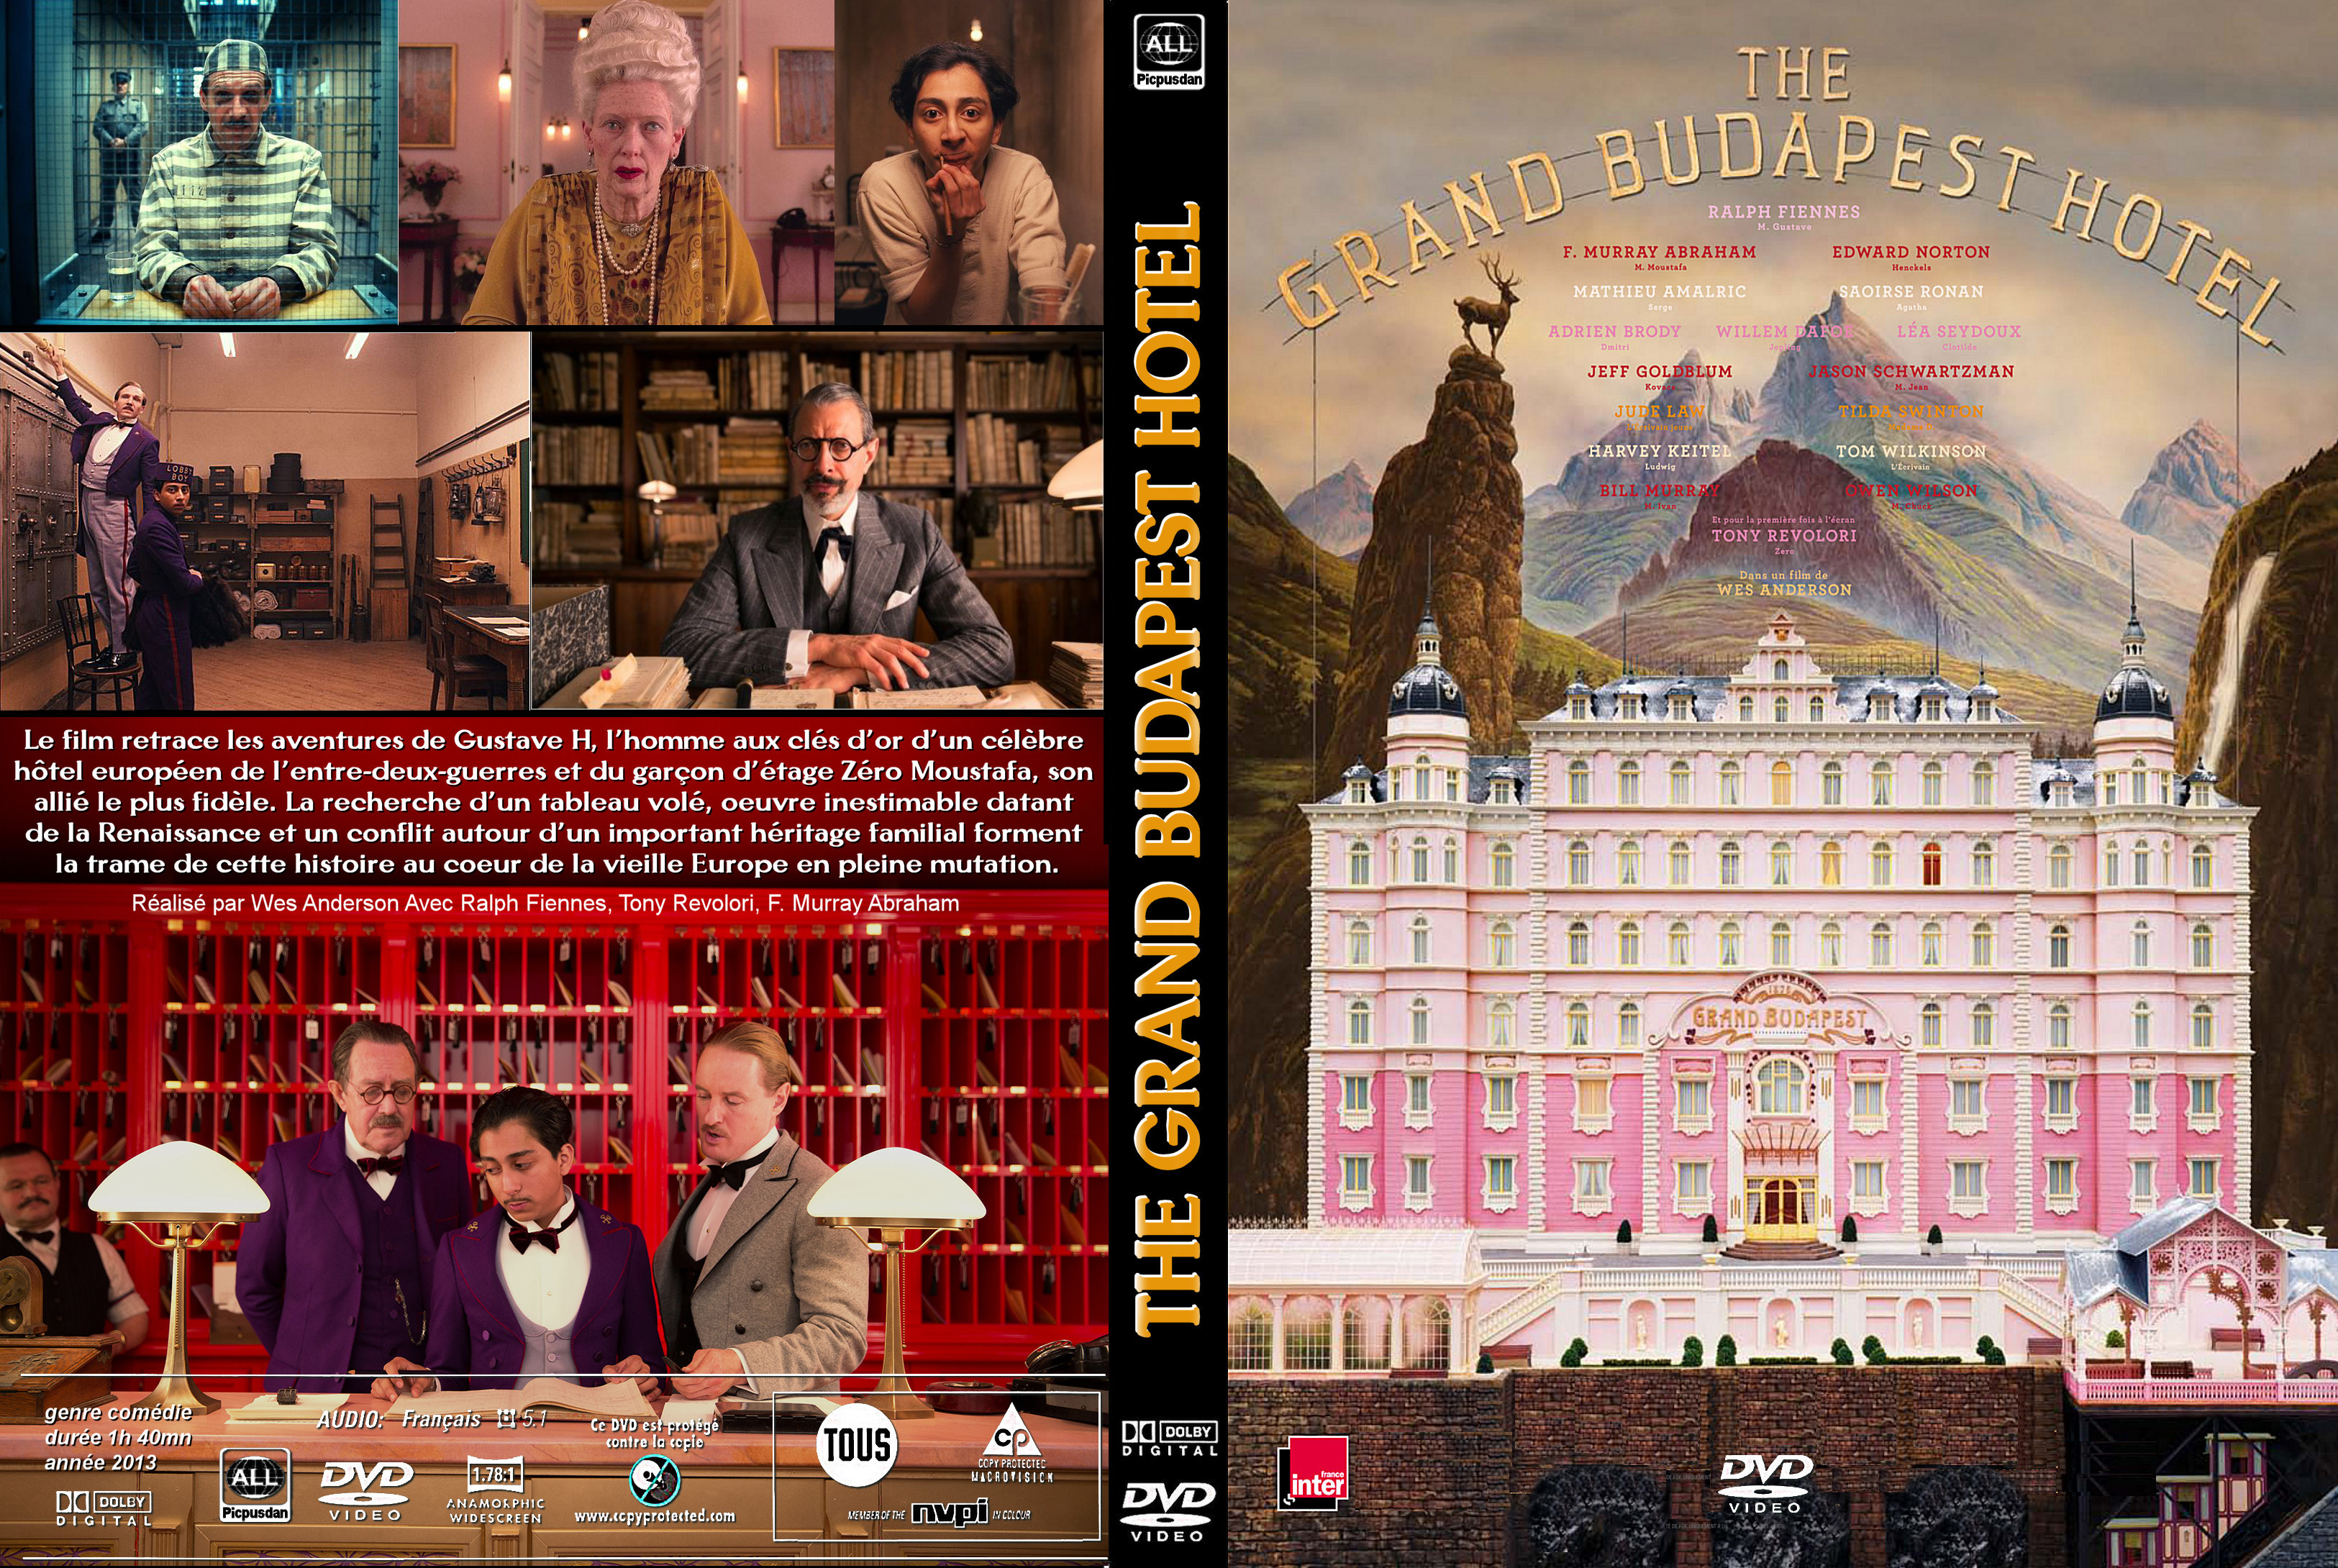 Jaquette DVD The Grand Budapest Hotel custom